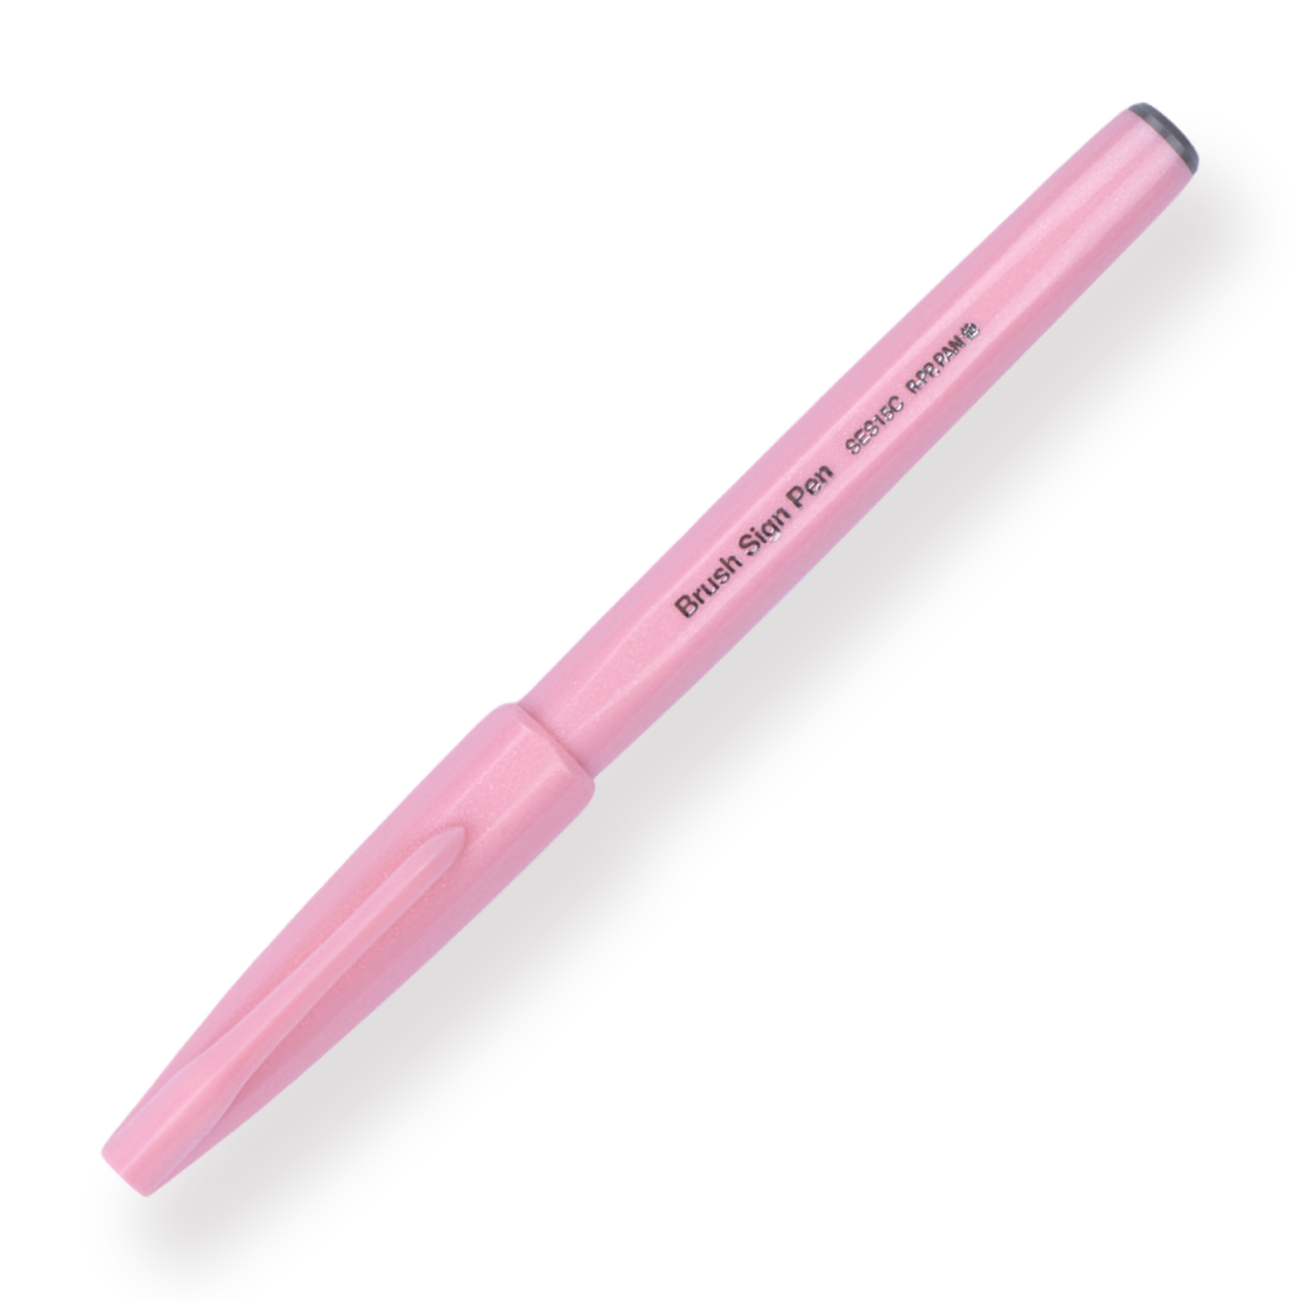 Pentel Fude Touch Brush Sign Pen - Rosa pálido - 2020 nuevos colores